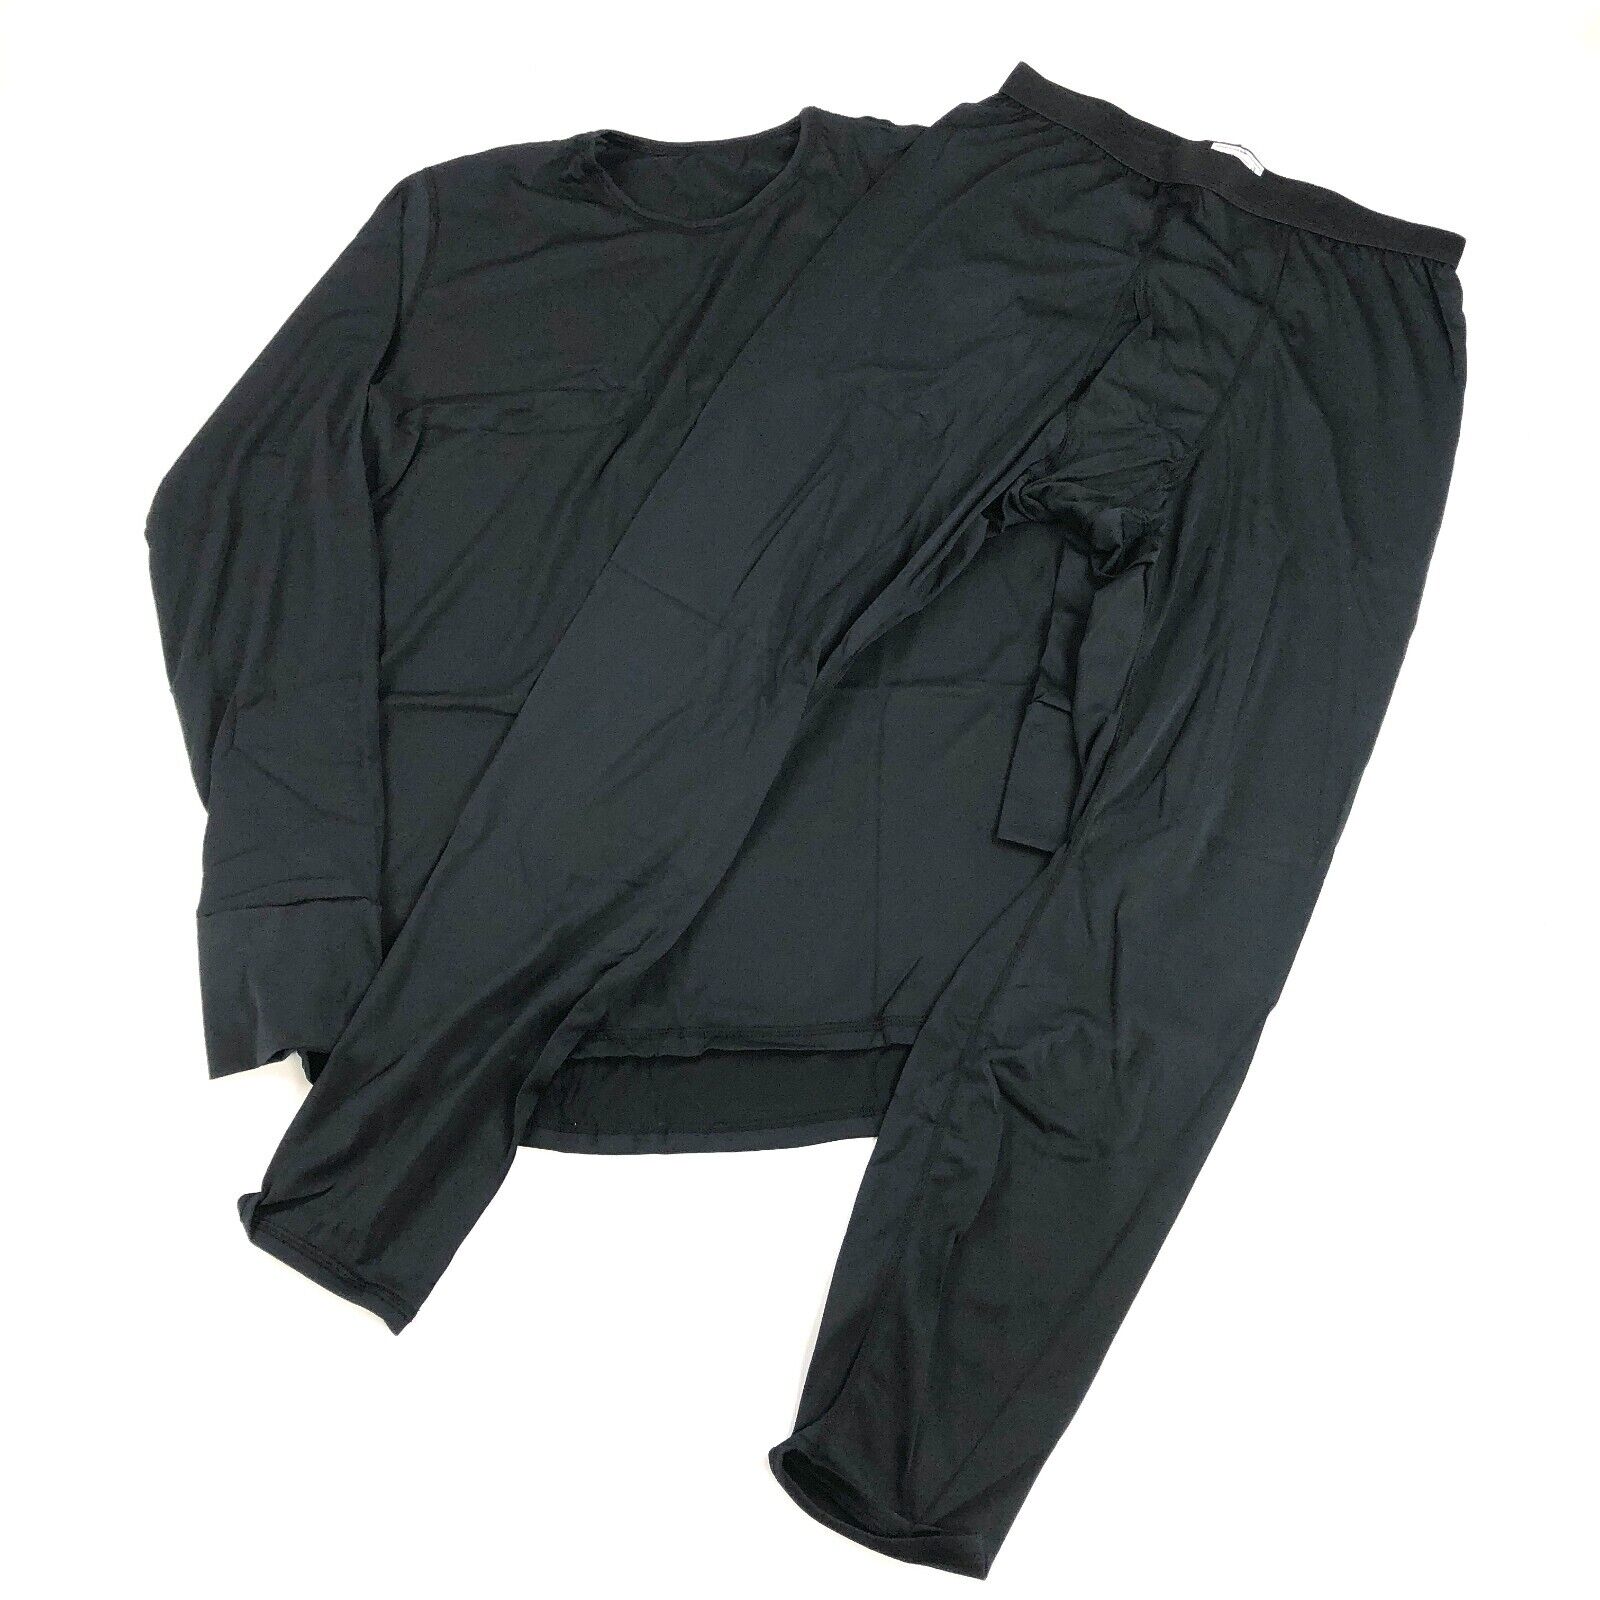 USGI Polartec Level 1 Layer Thermal Set Black Undershirt & Pants LARGE LONG